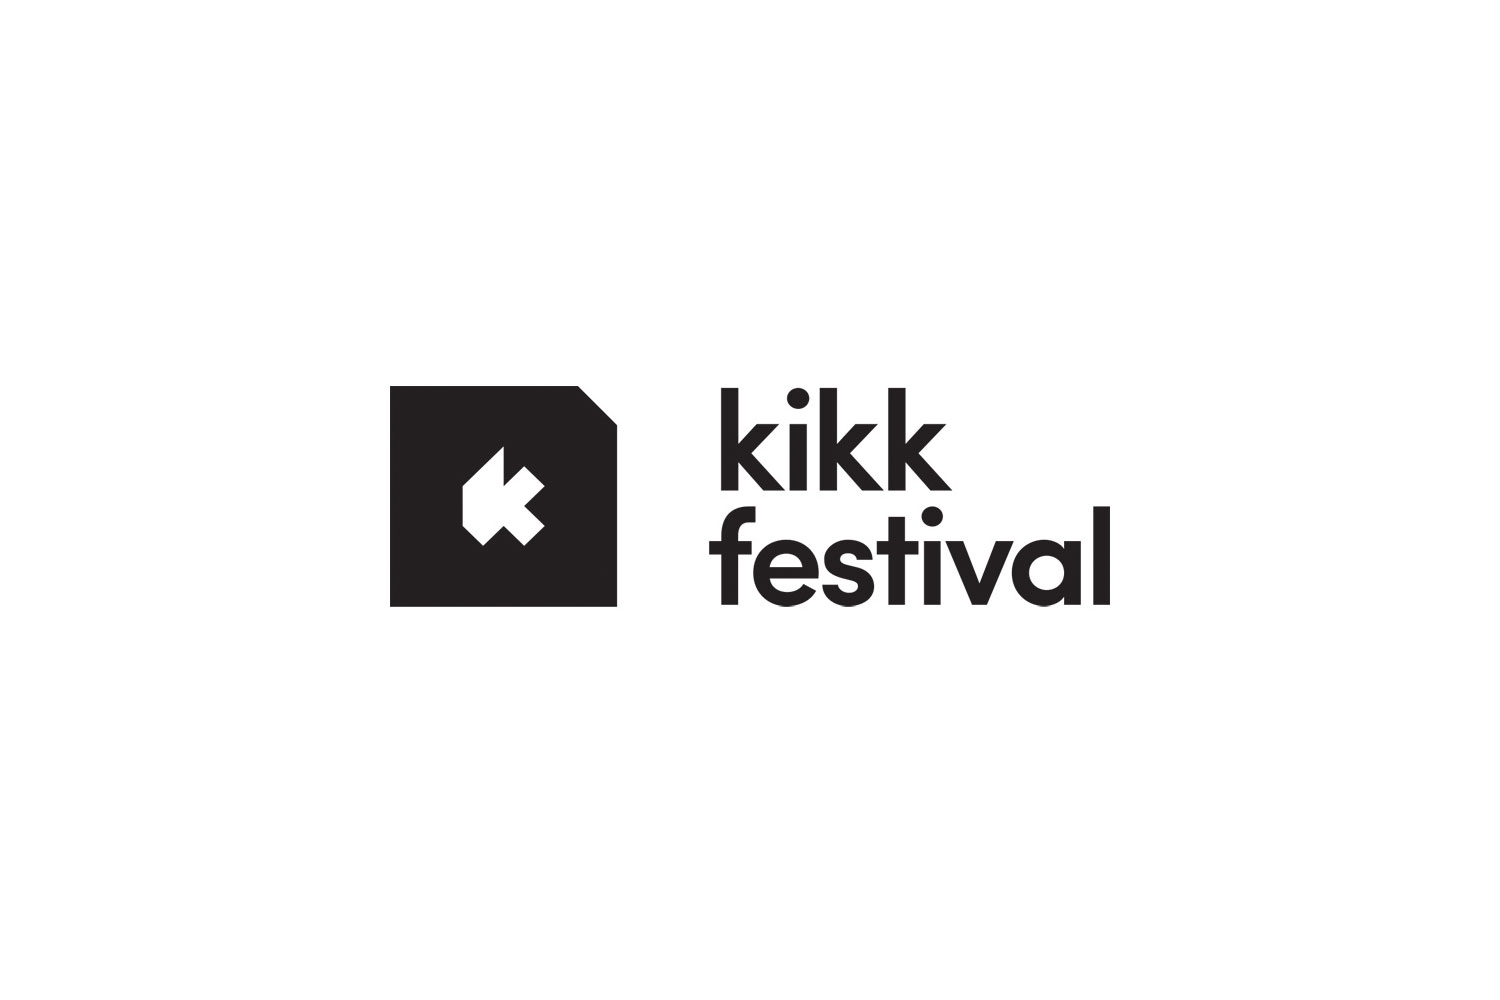 KIKK_logo.jpg